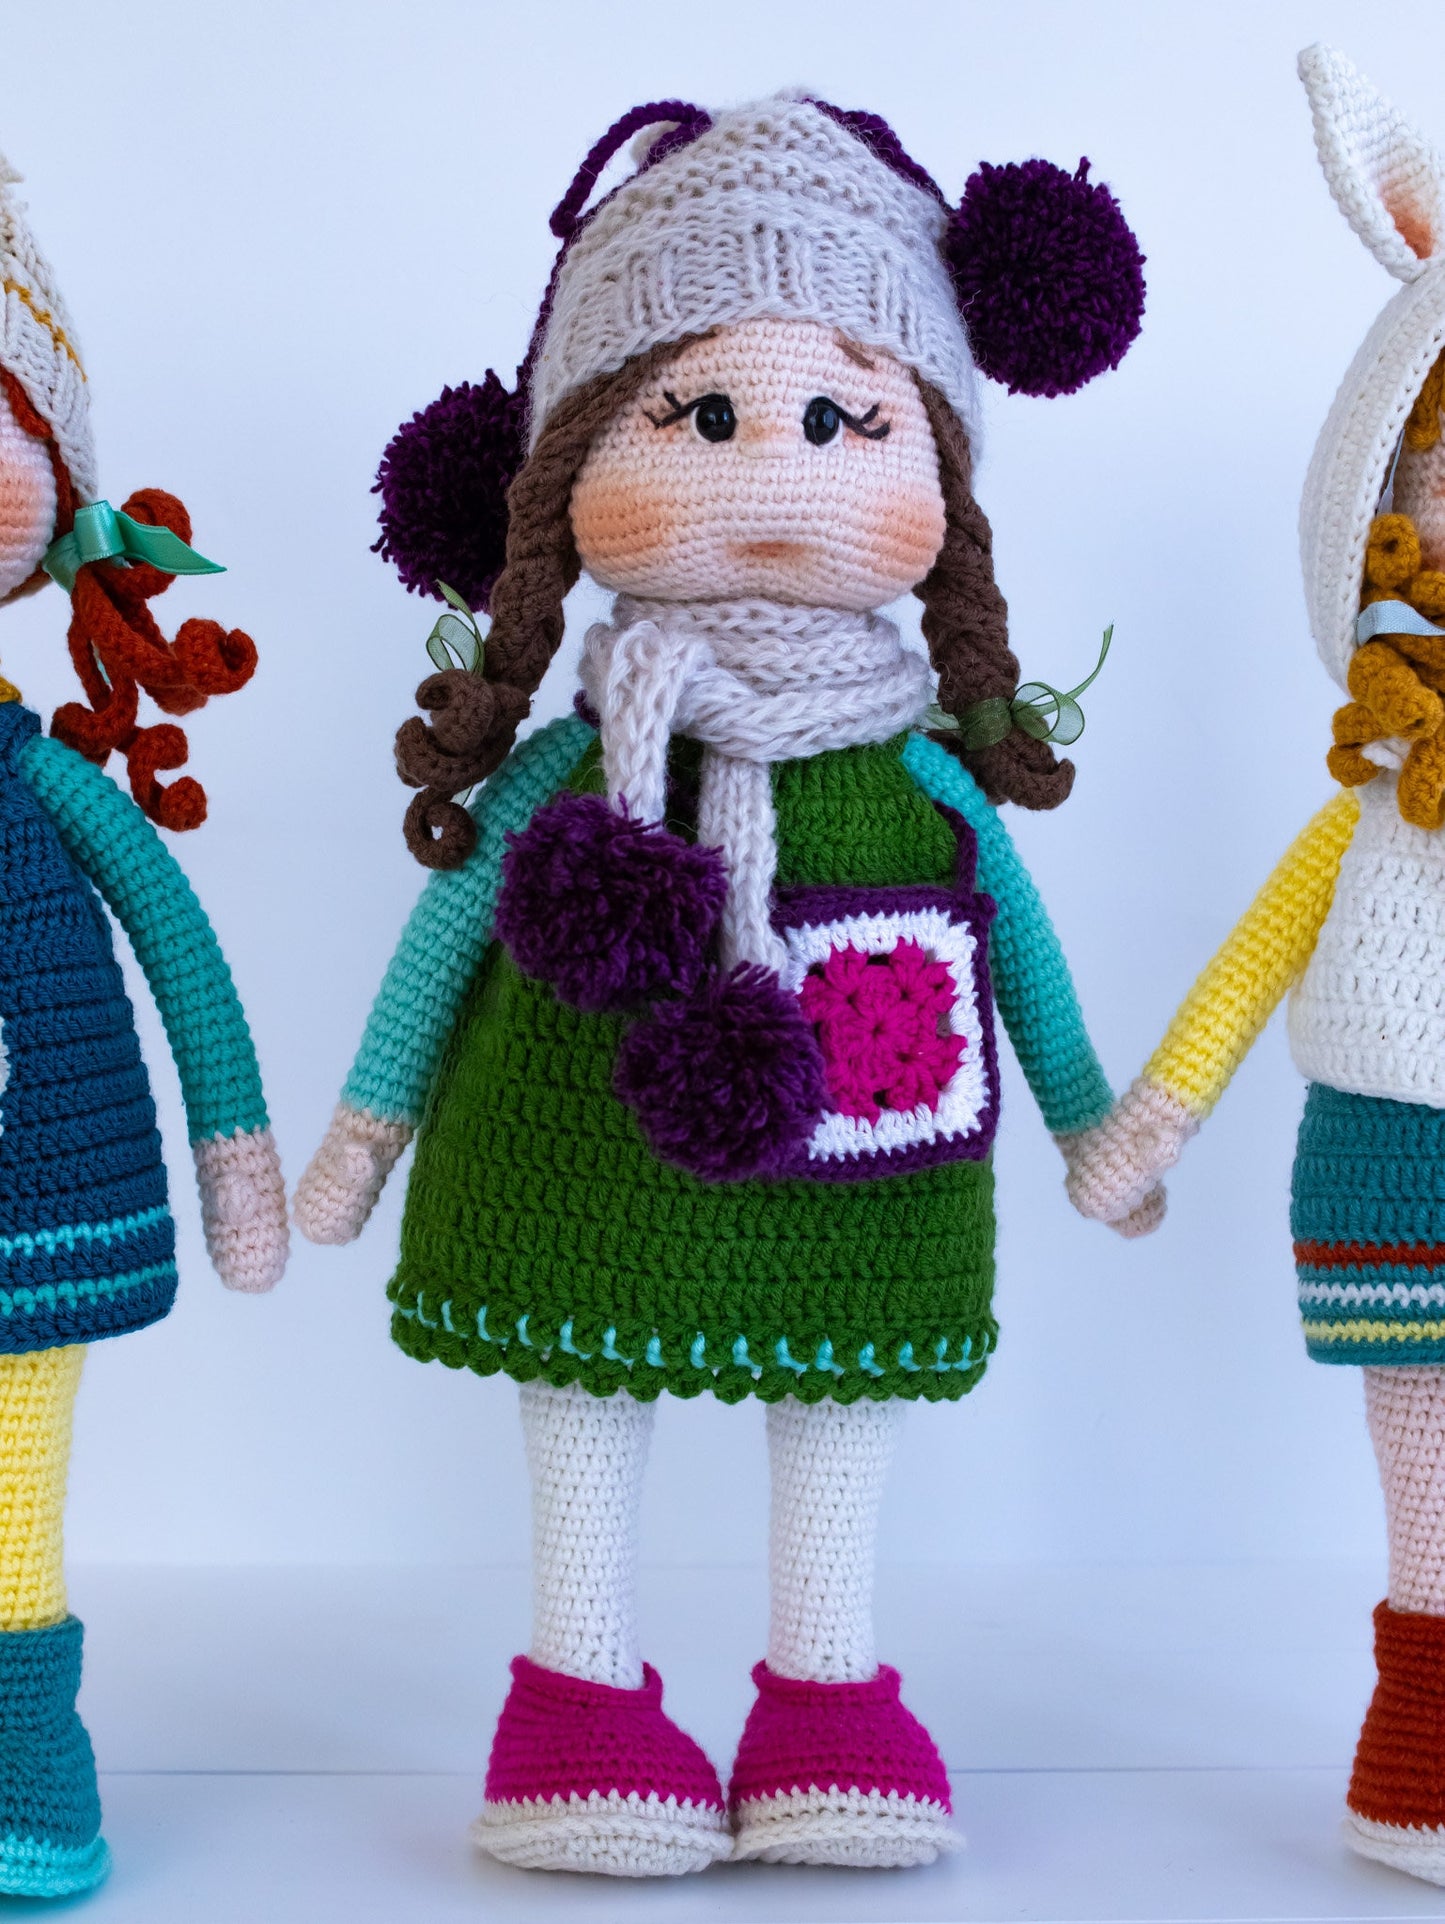 Crochet Doll Dora, Amigurumi Doll, Christmas Amigurumi, Crochet Amigurumi, Knitted Doll, Handmade Doll, Daughter Gift, Best Christmas Gift